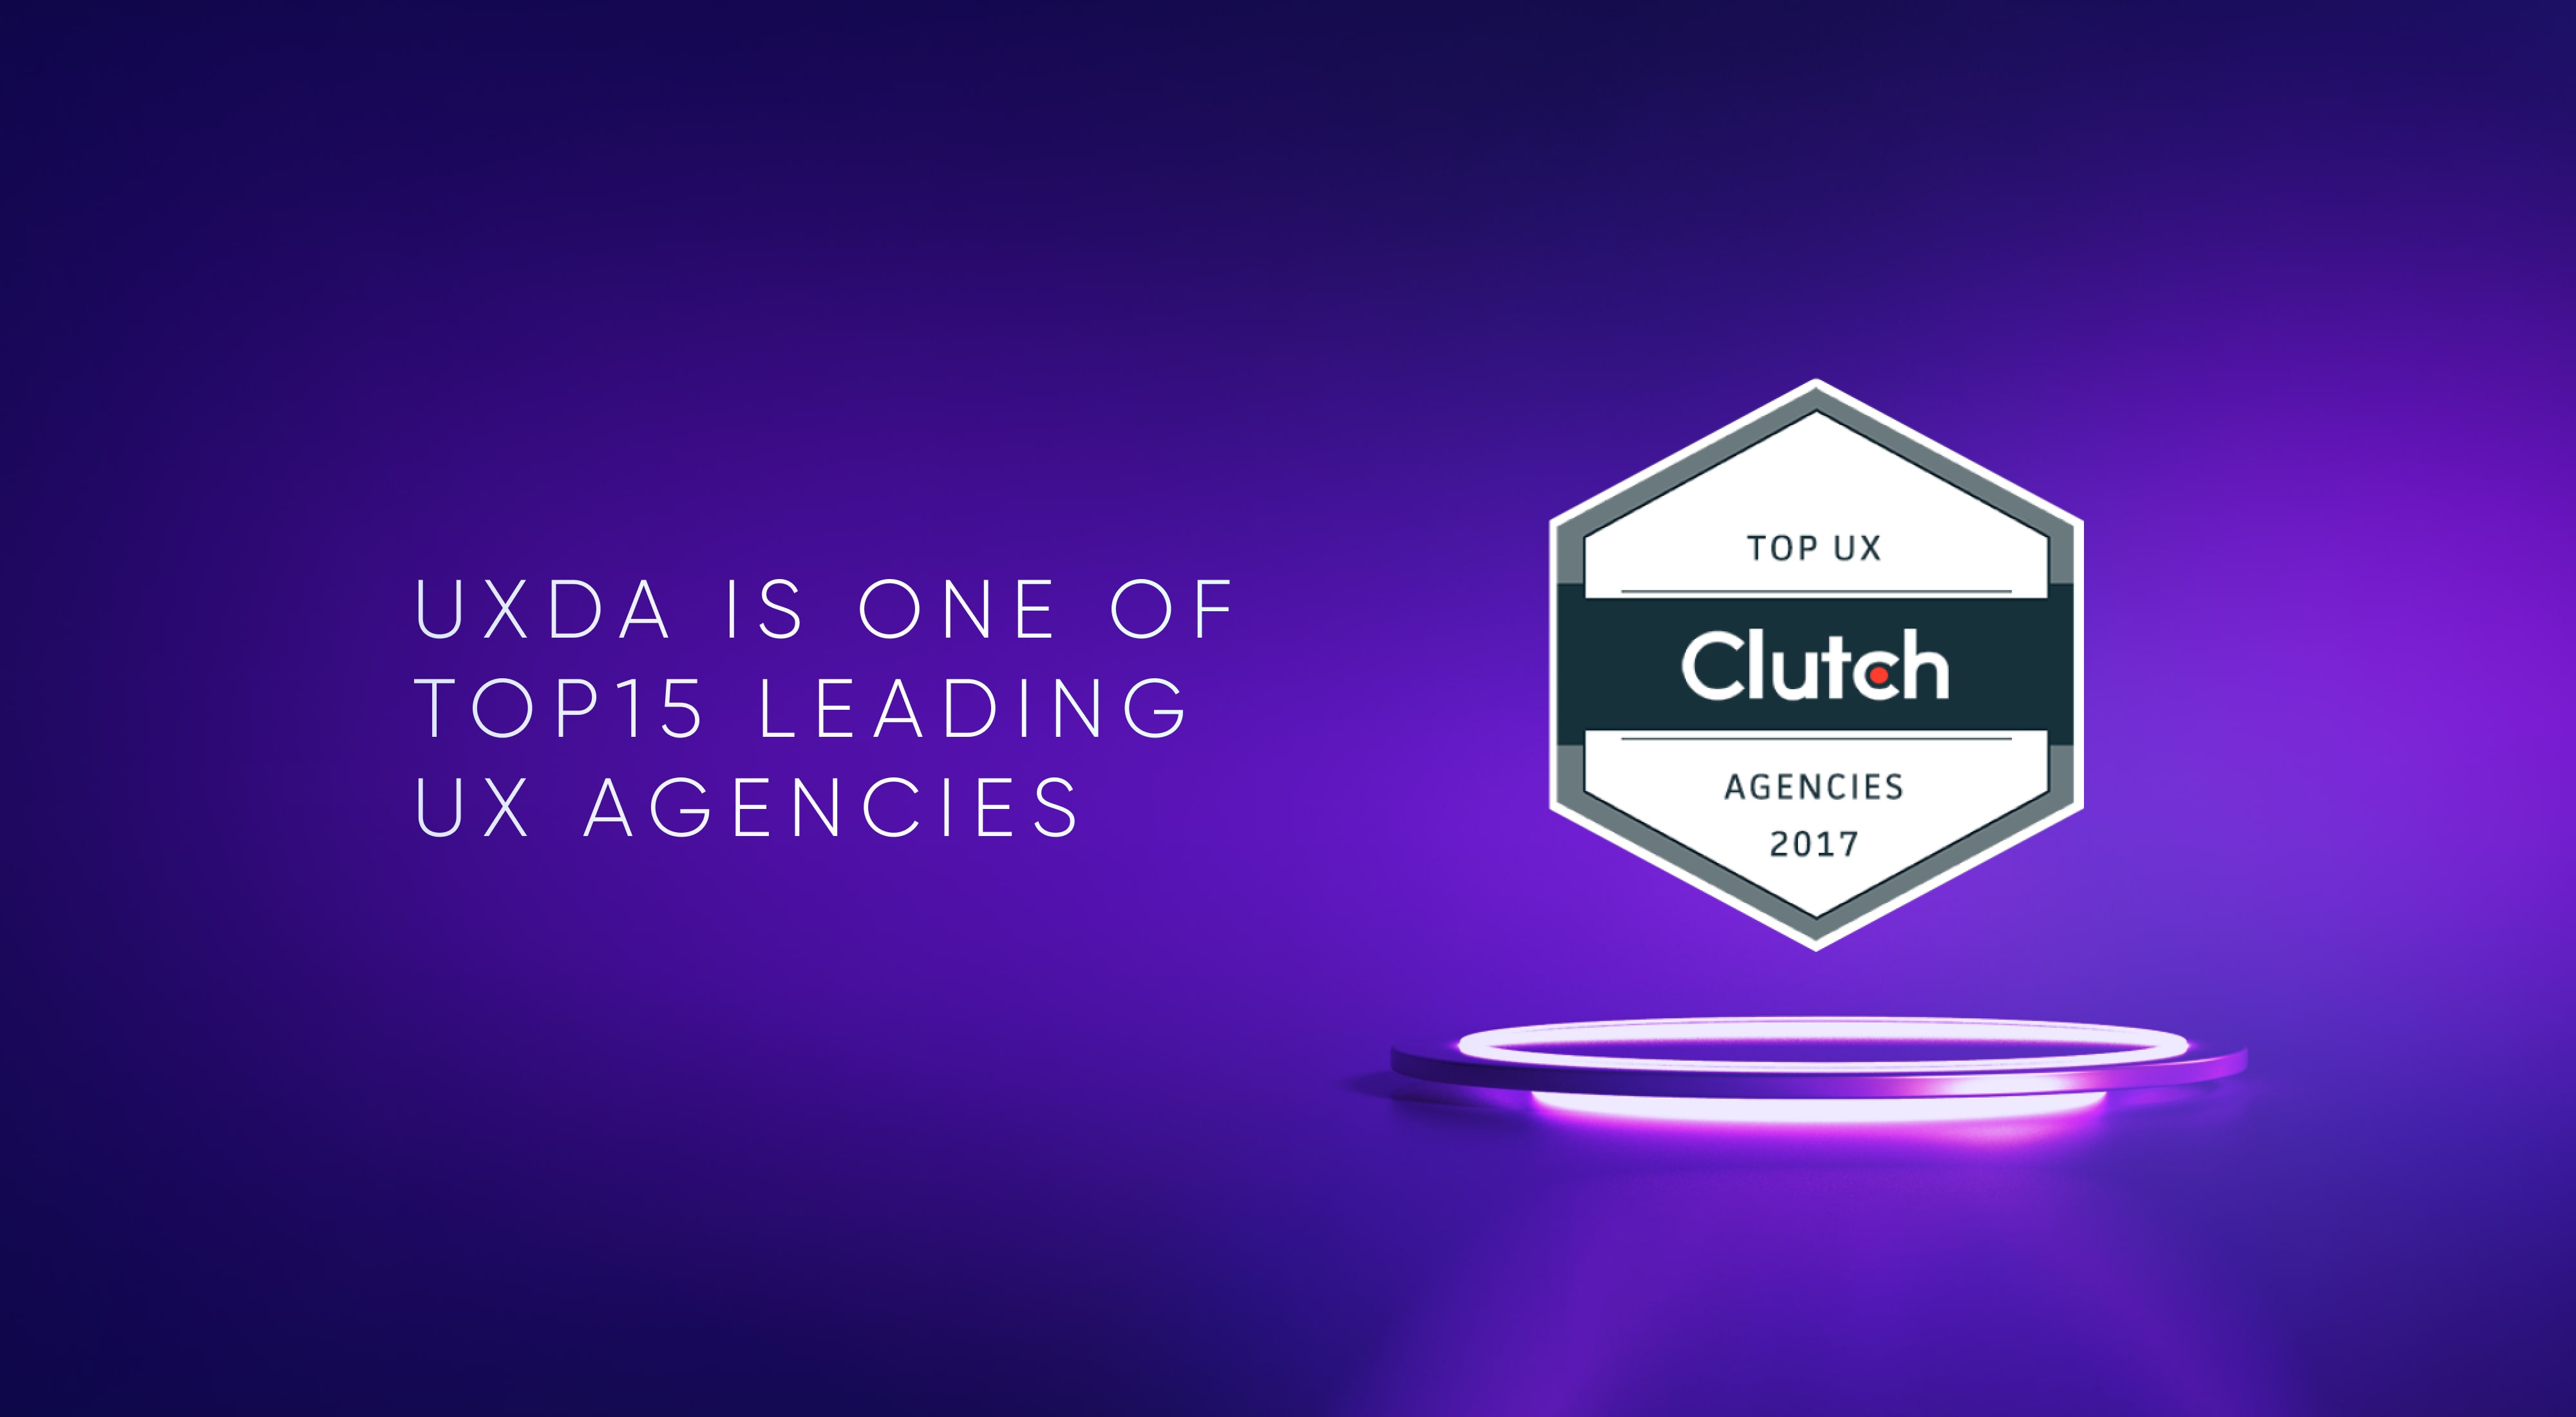 UXDA Is One of TOP15 Leading UX Agencies